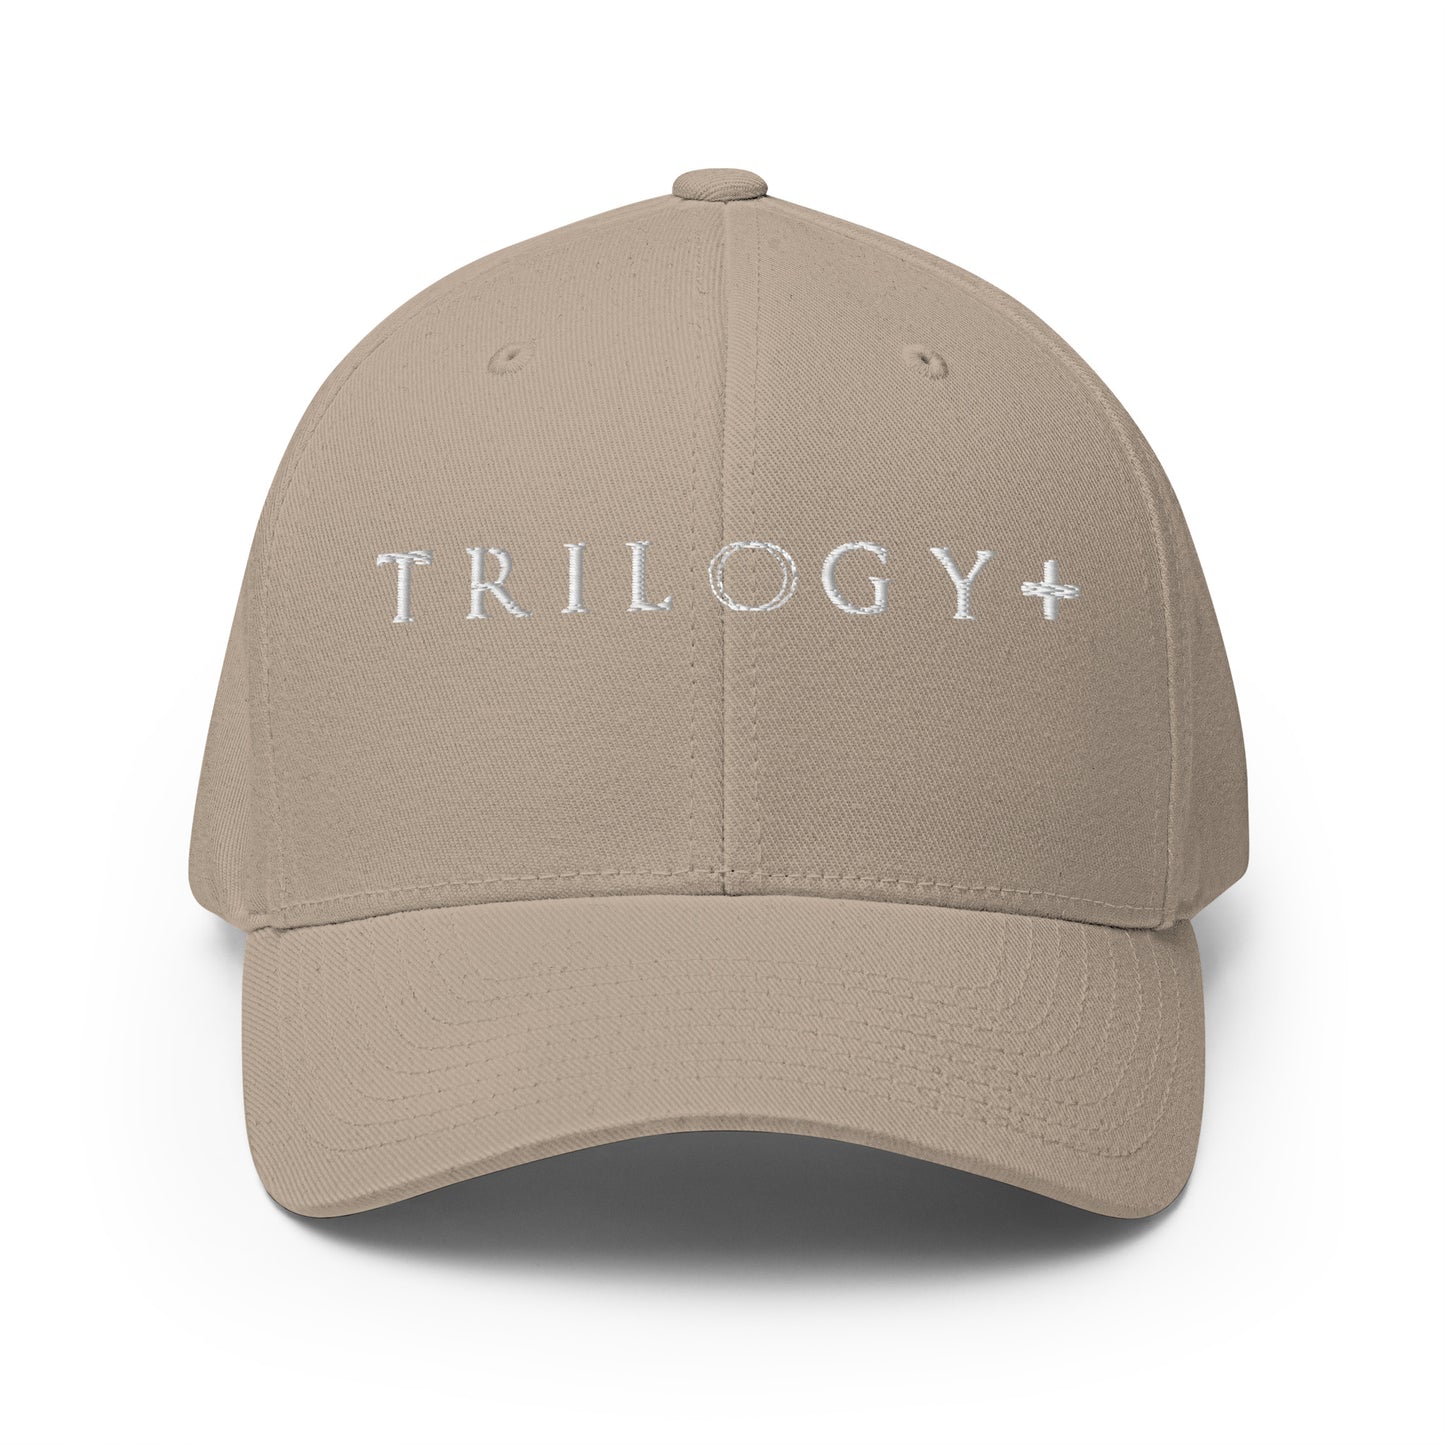 Trilogy Plus | Structured Twill Cap